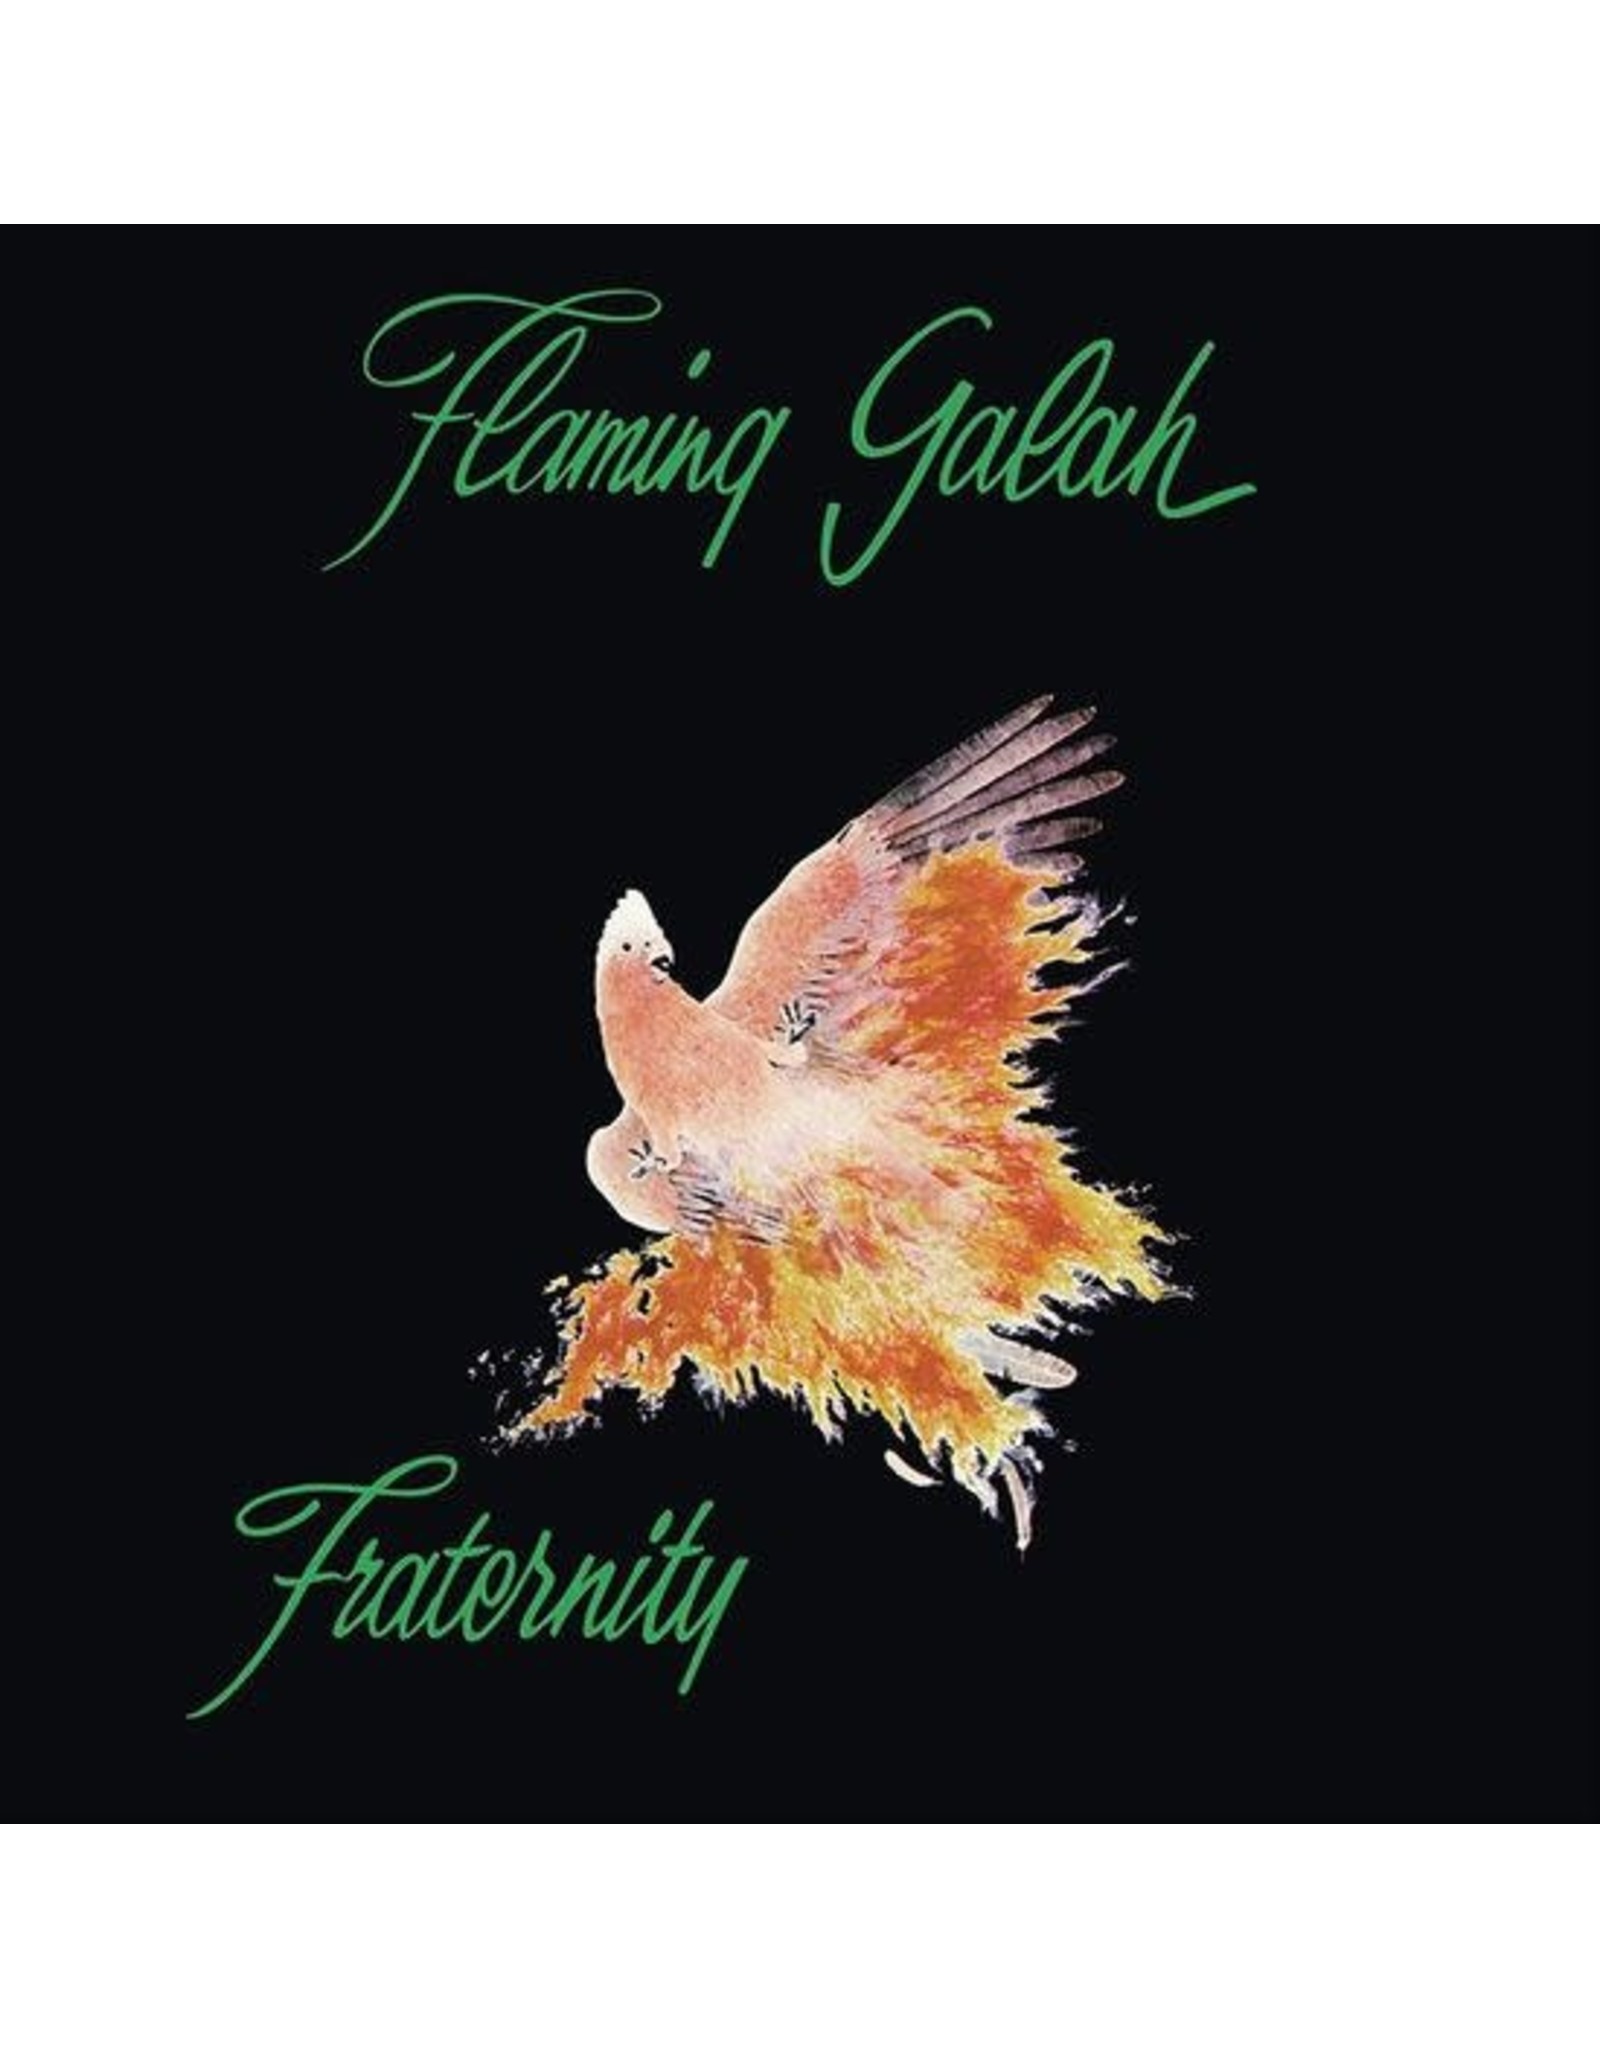 Fraternity: 2023RSD - Flaming Galah (Green) LP